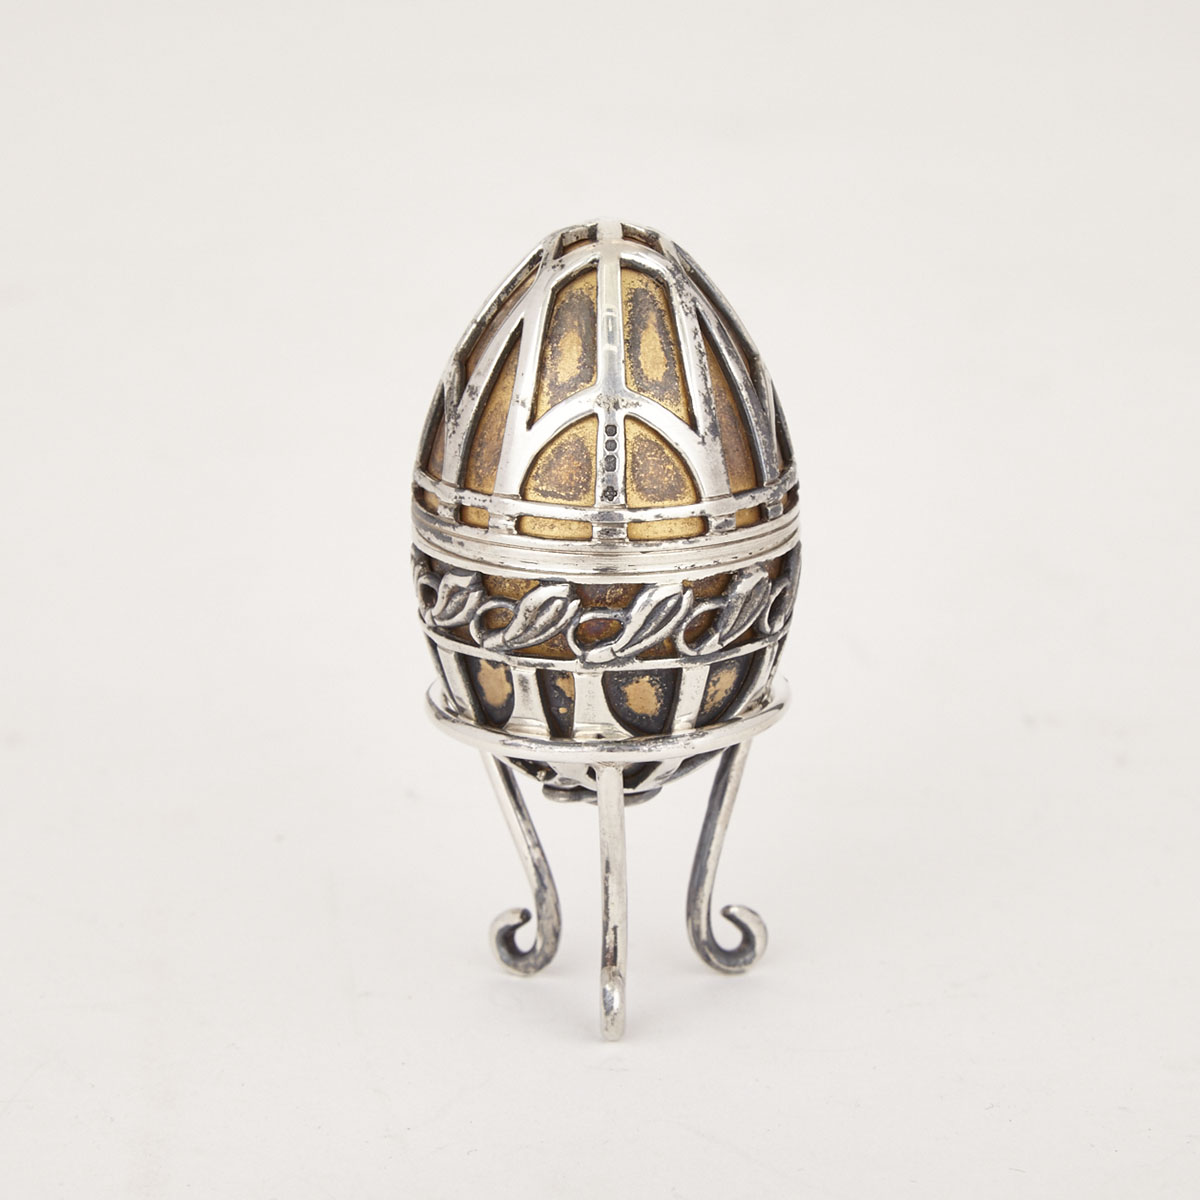 English Silver Parcel-Gilt Egg, St. James House Co., London, 1978